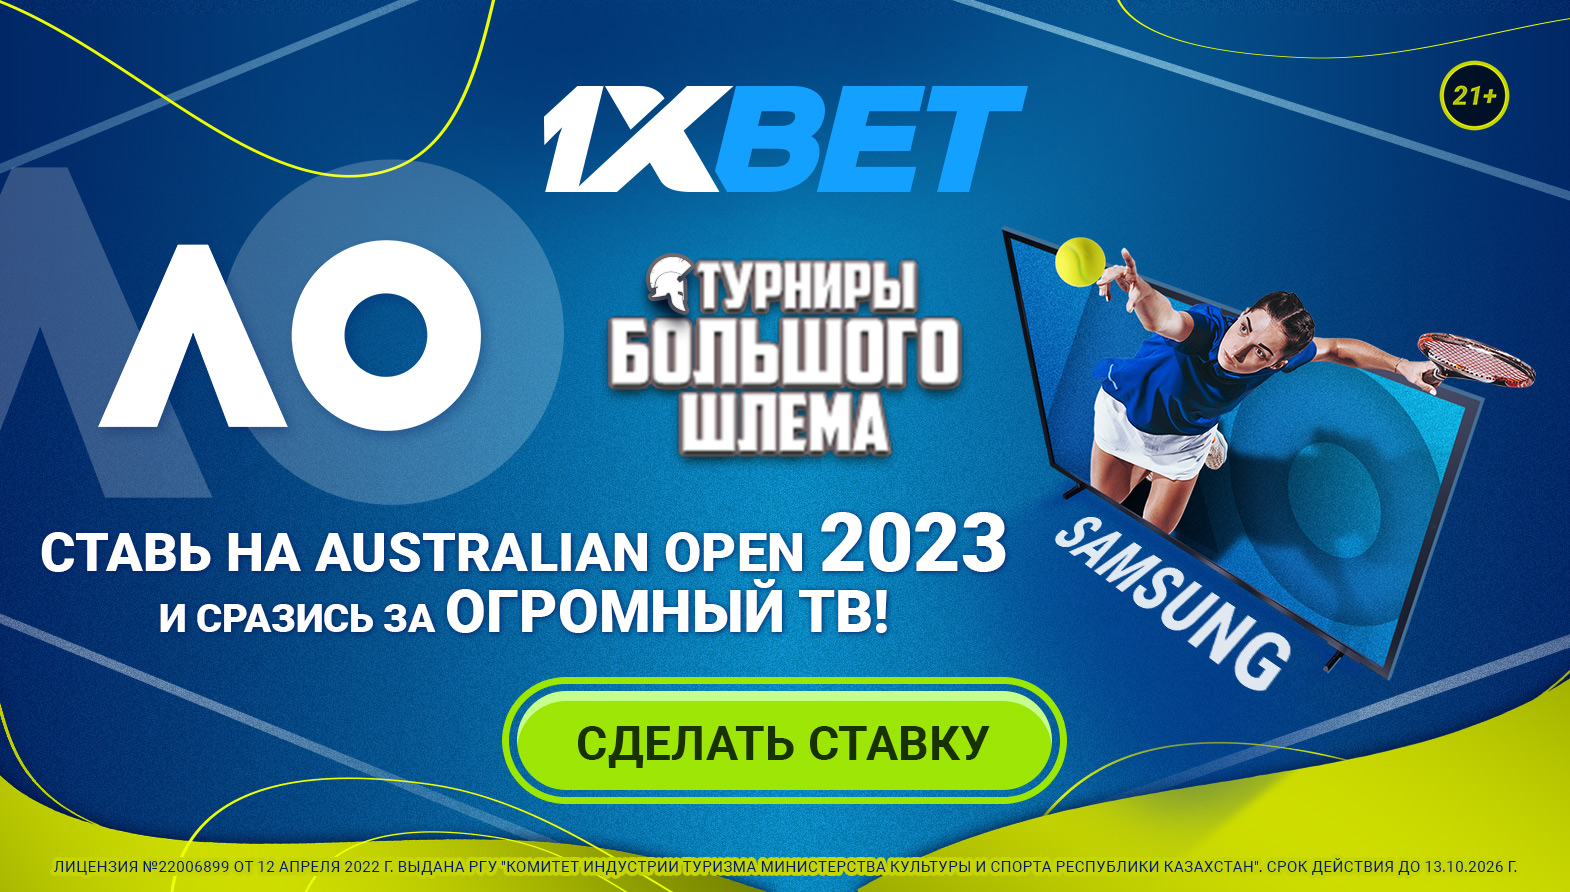 1xBet разыгрывает огромный телевизор за ставки на Australian Open 2023